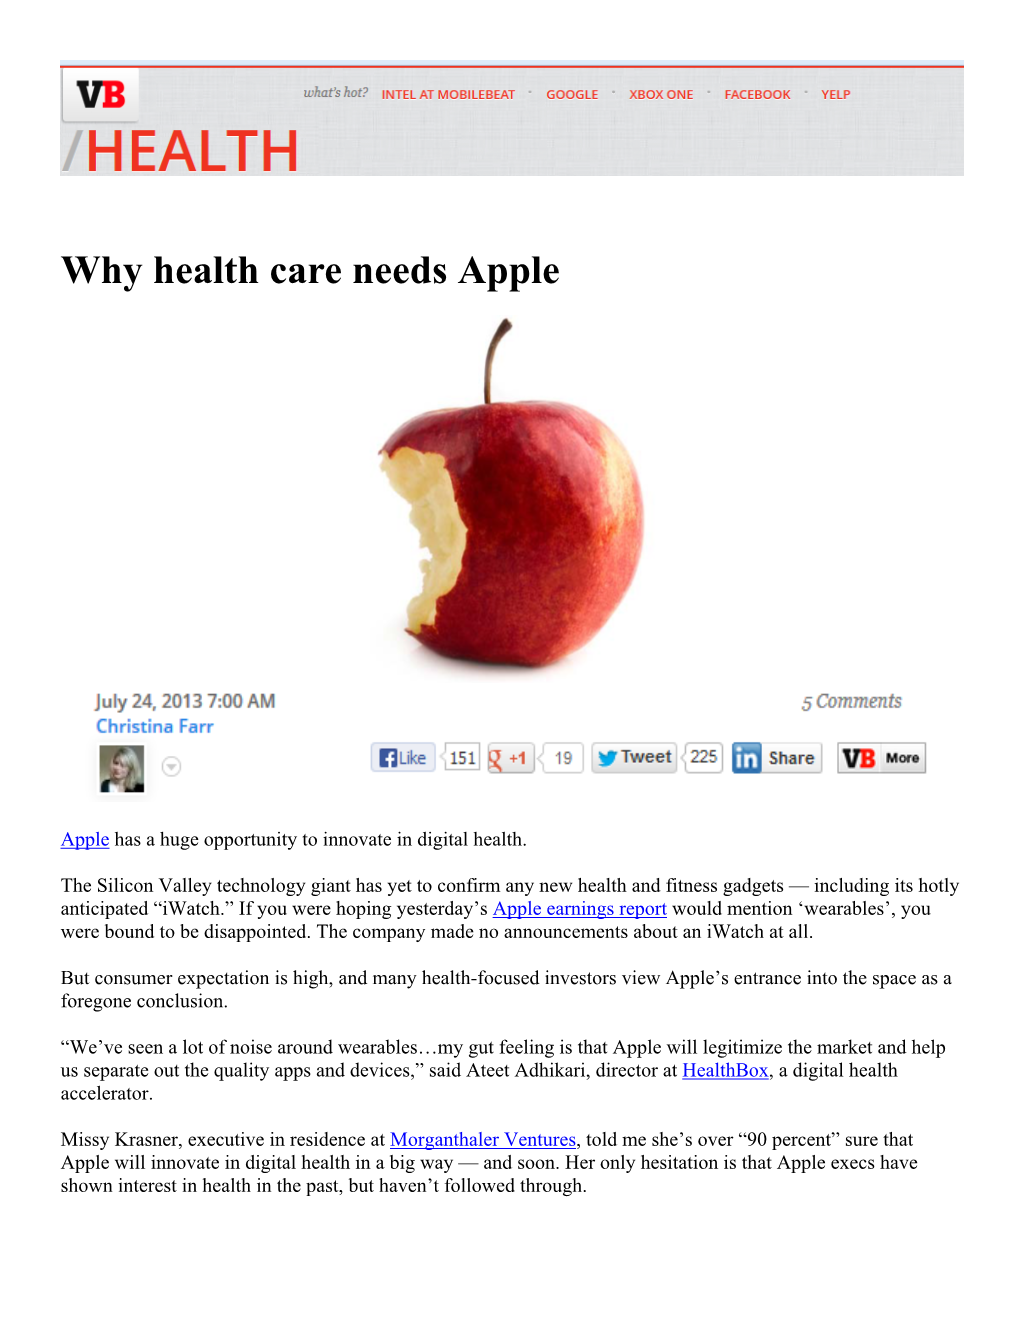 Why Health Care Needs Apple